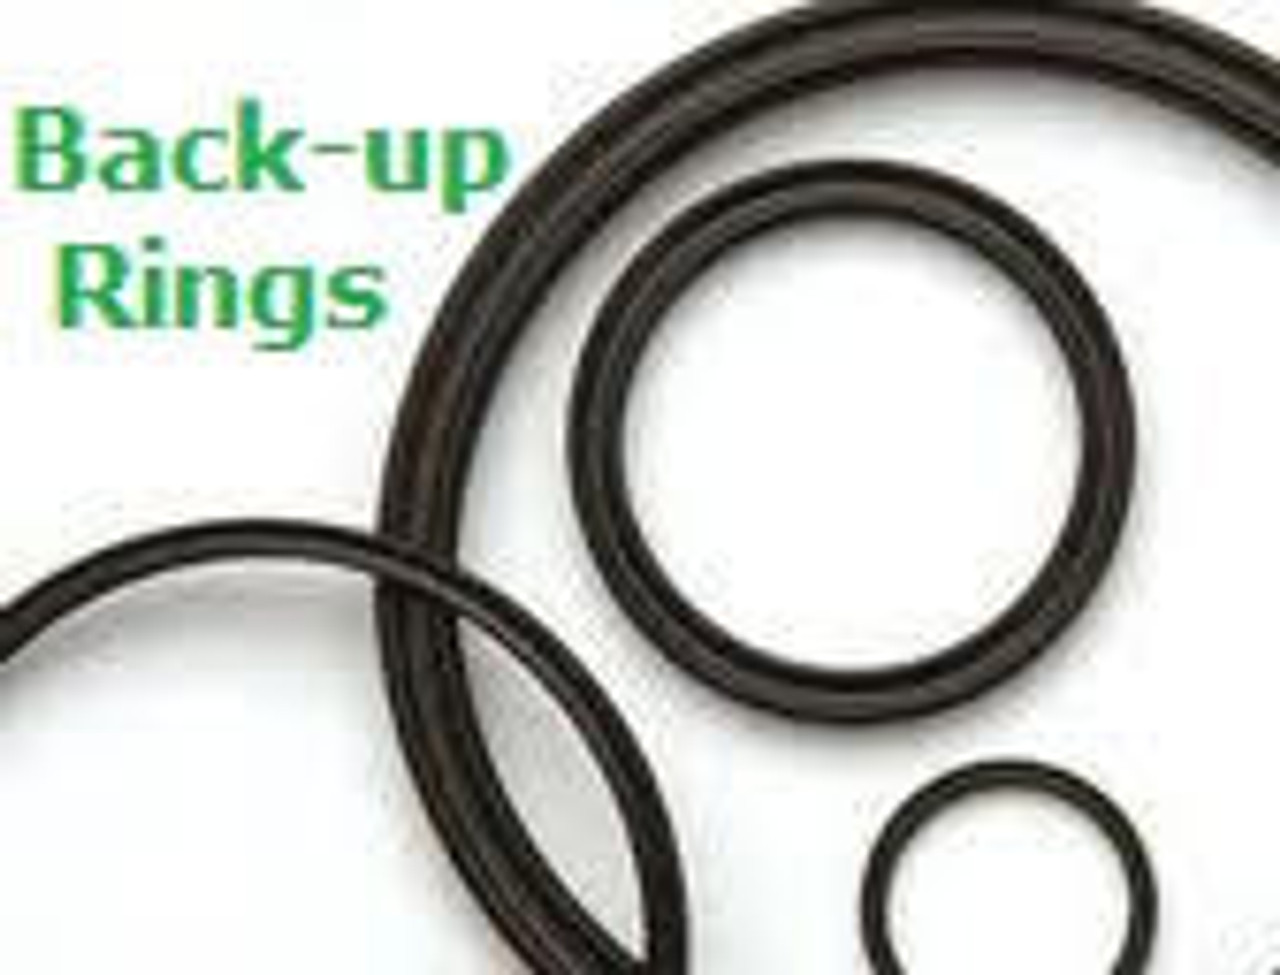 Backup Rings Buna Size 372 Price for 1 pc